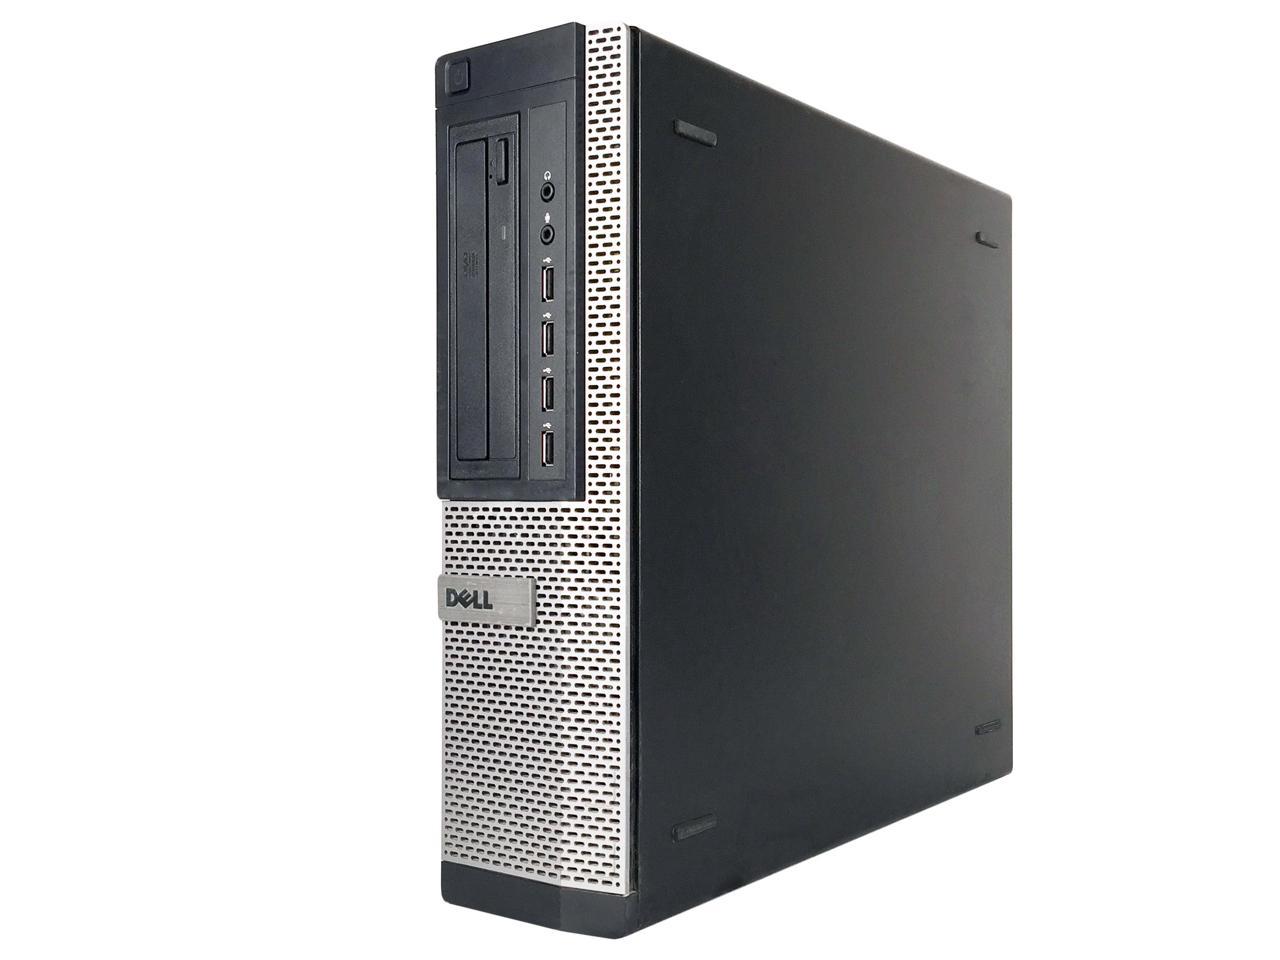 Refurbished Dell Grade A OptiPlex 990 Desktop Computer, Intel Core I5-2500 (3.3 GHz), 4G DDR3, 500G HDD, DVD, WIFI, Windows 10 Home 64-bit (English/Spanish), 1 Year Warranty